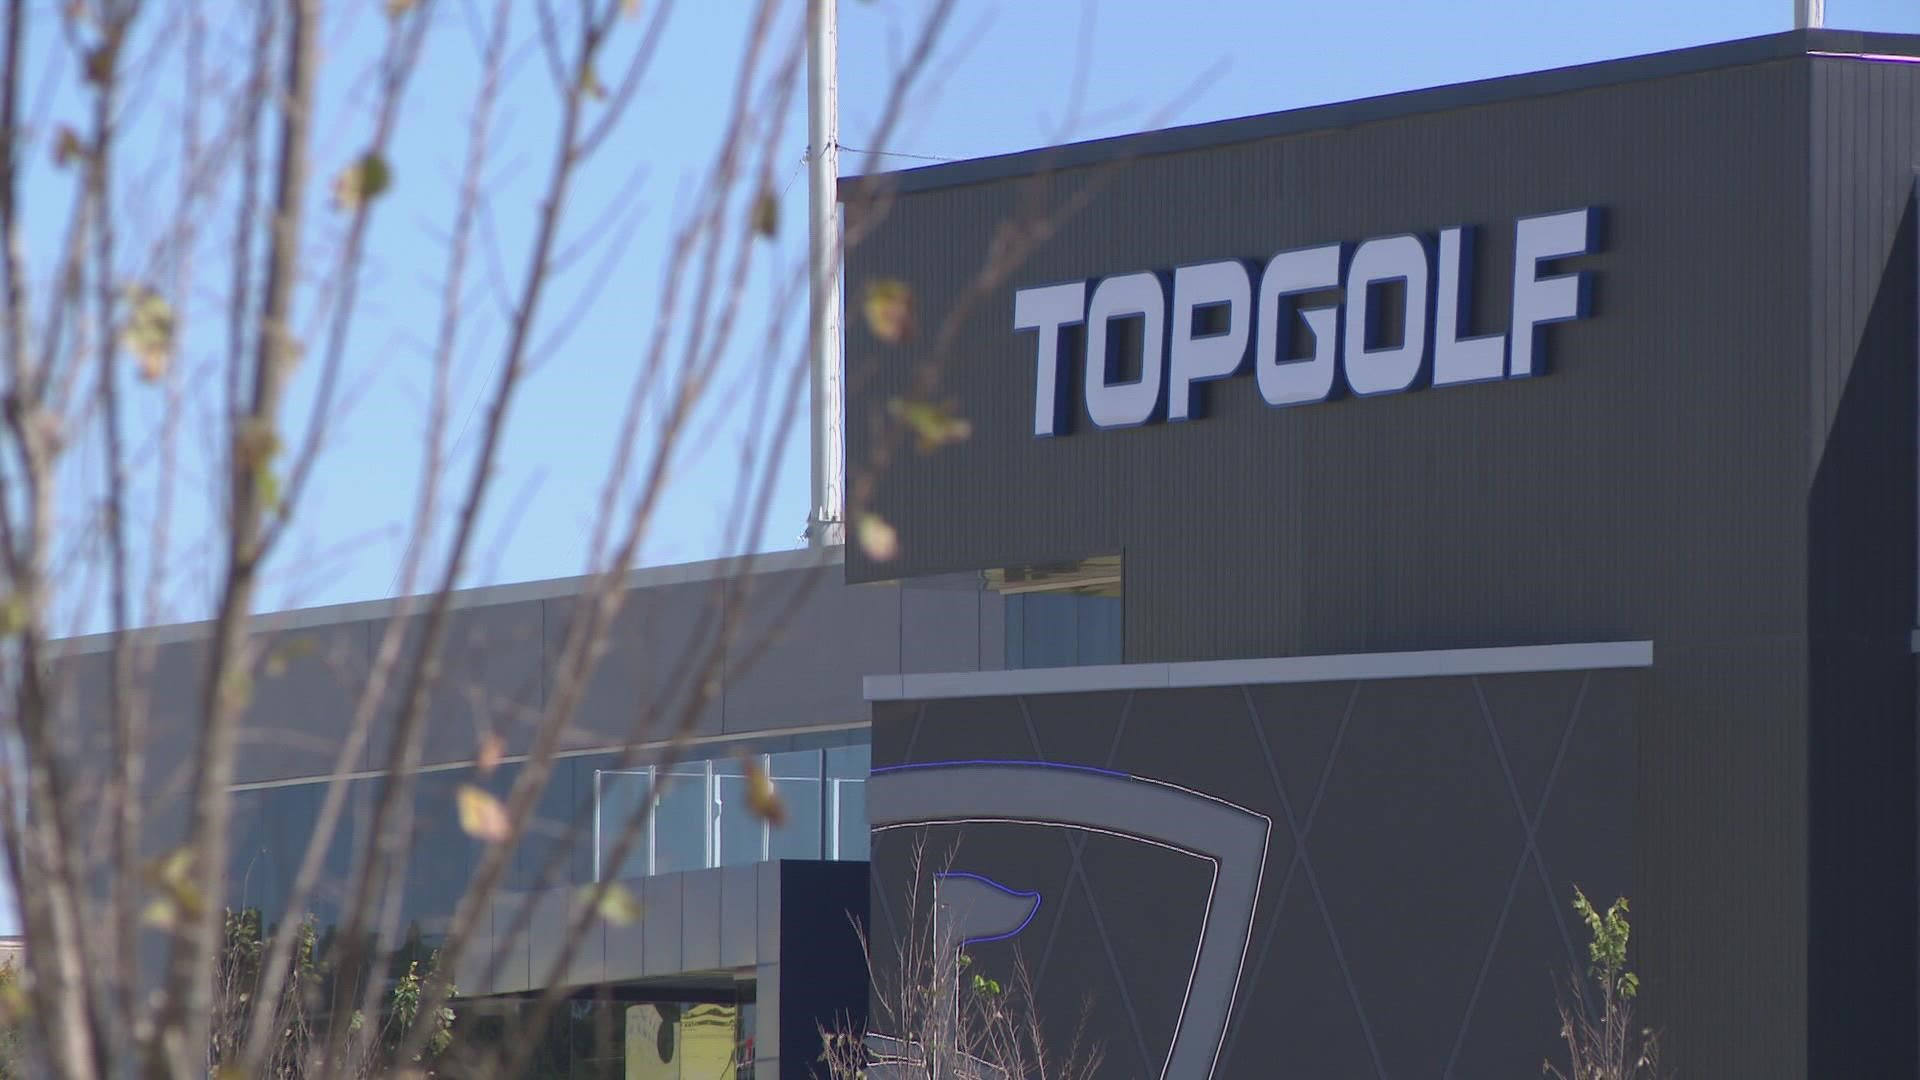 Topgolf Louisville set to open Friday, Nov. 18